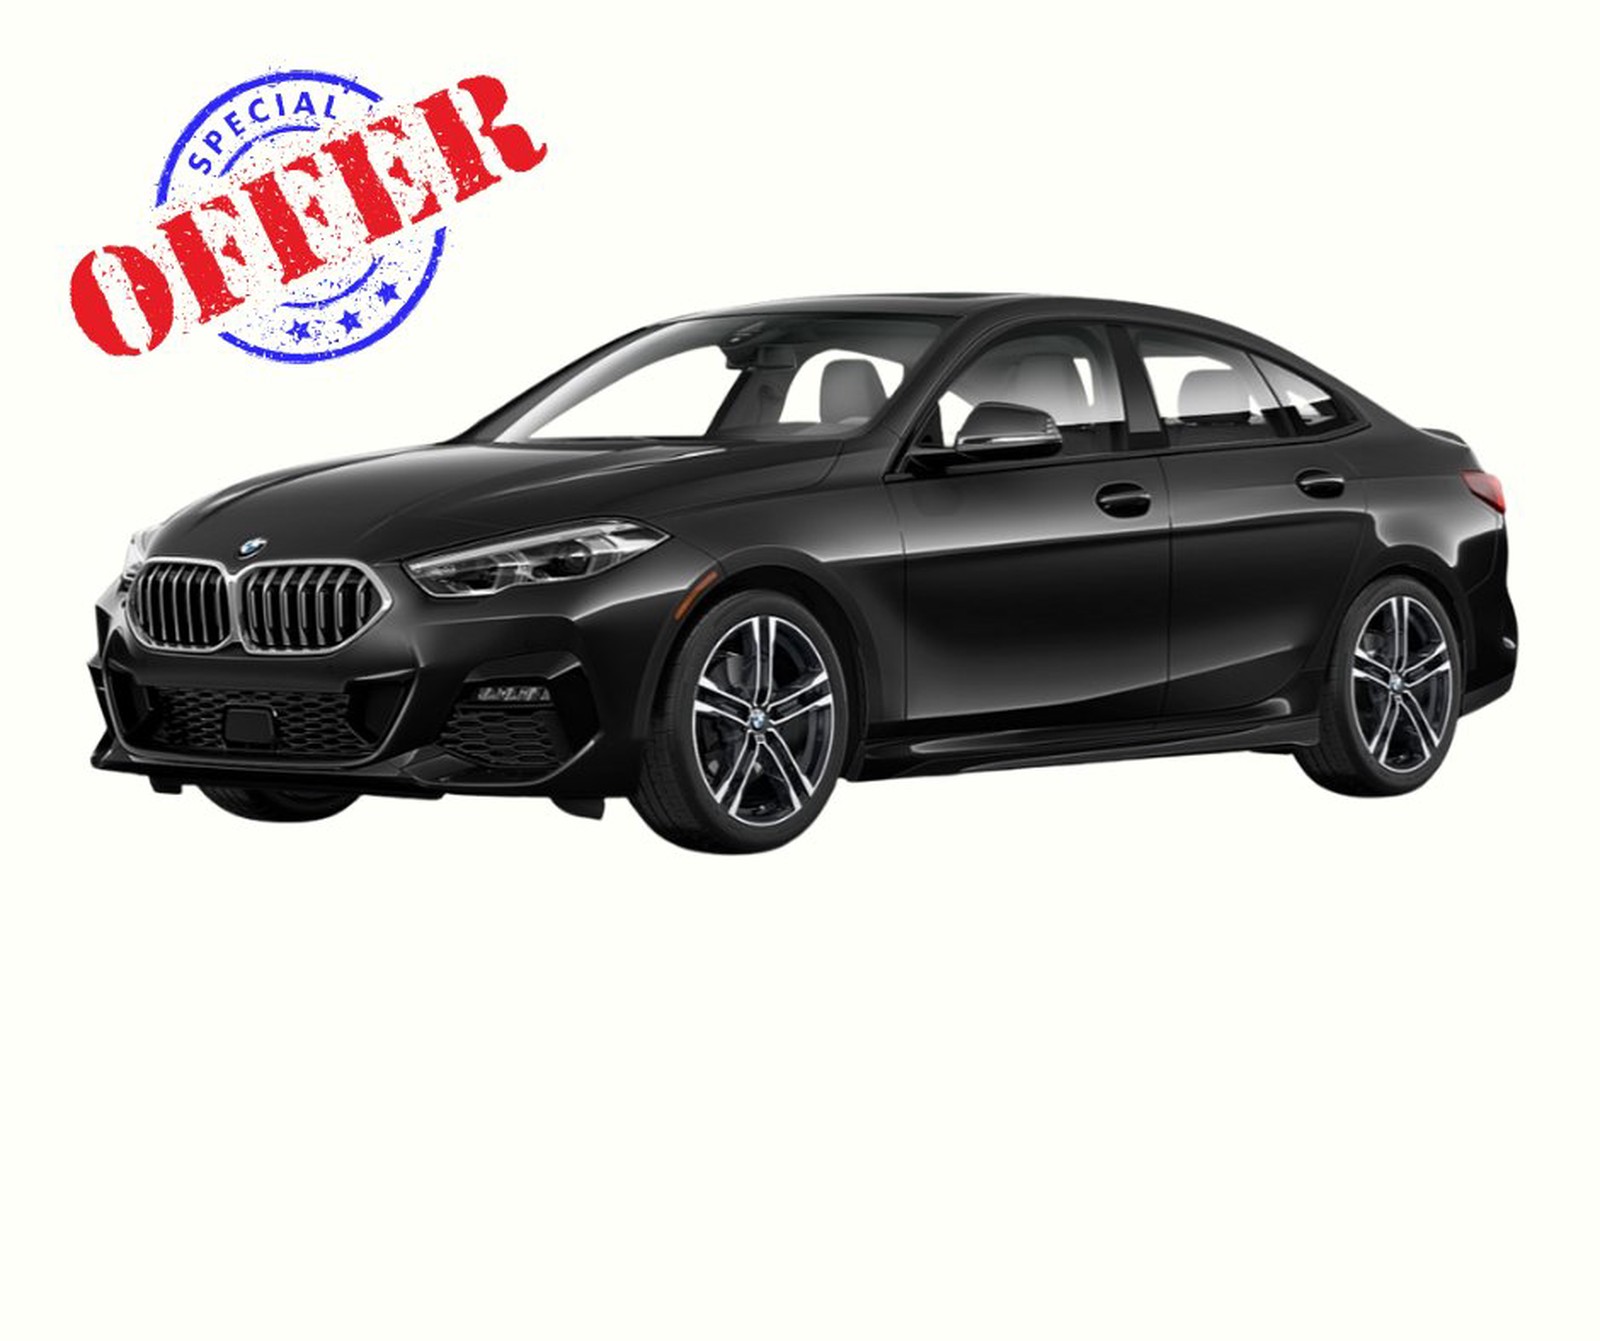 BMW 228 i xDrive Gran Coupe (F44) - Tax Free Military Sales in